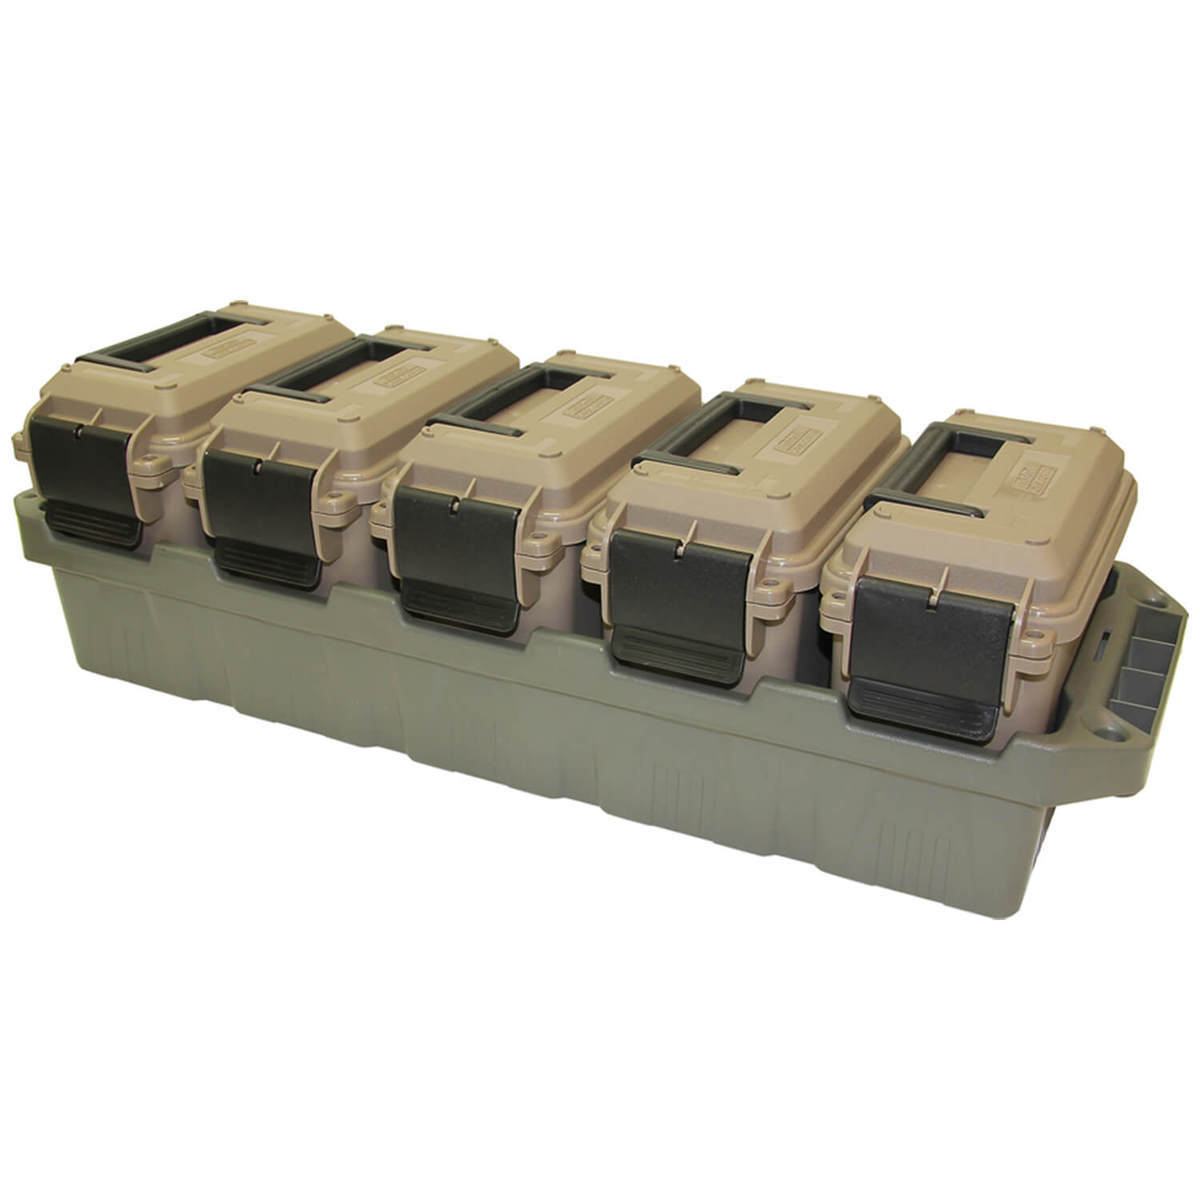 Plano Shot Shell Box, OD Green, Small Plastic Ammo Storage